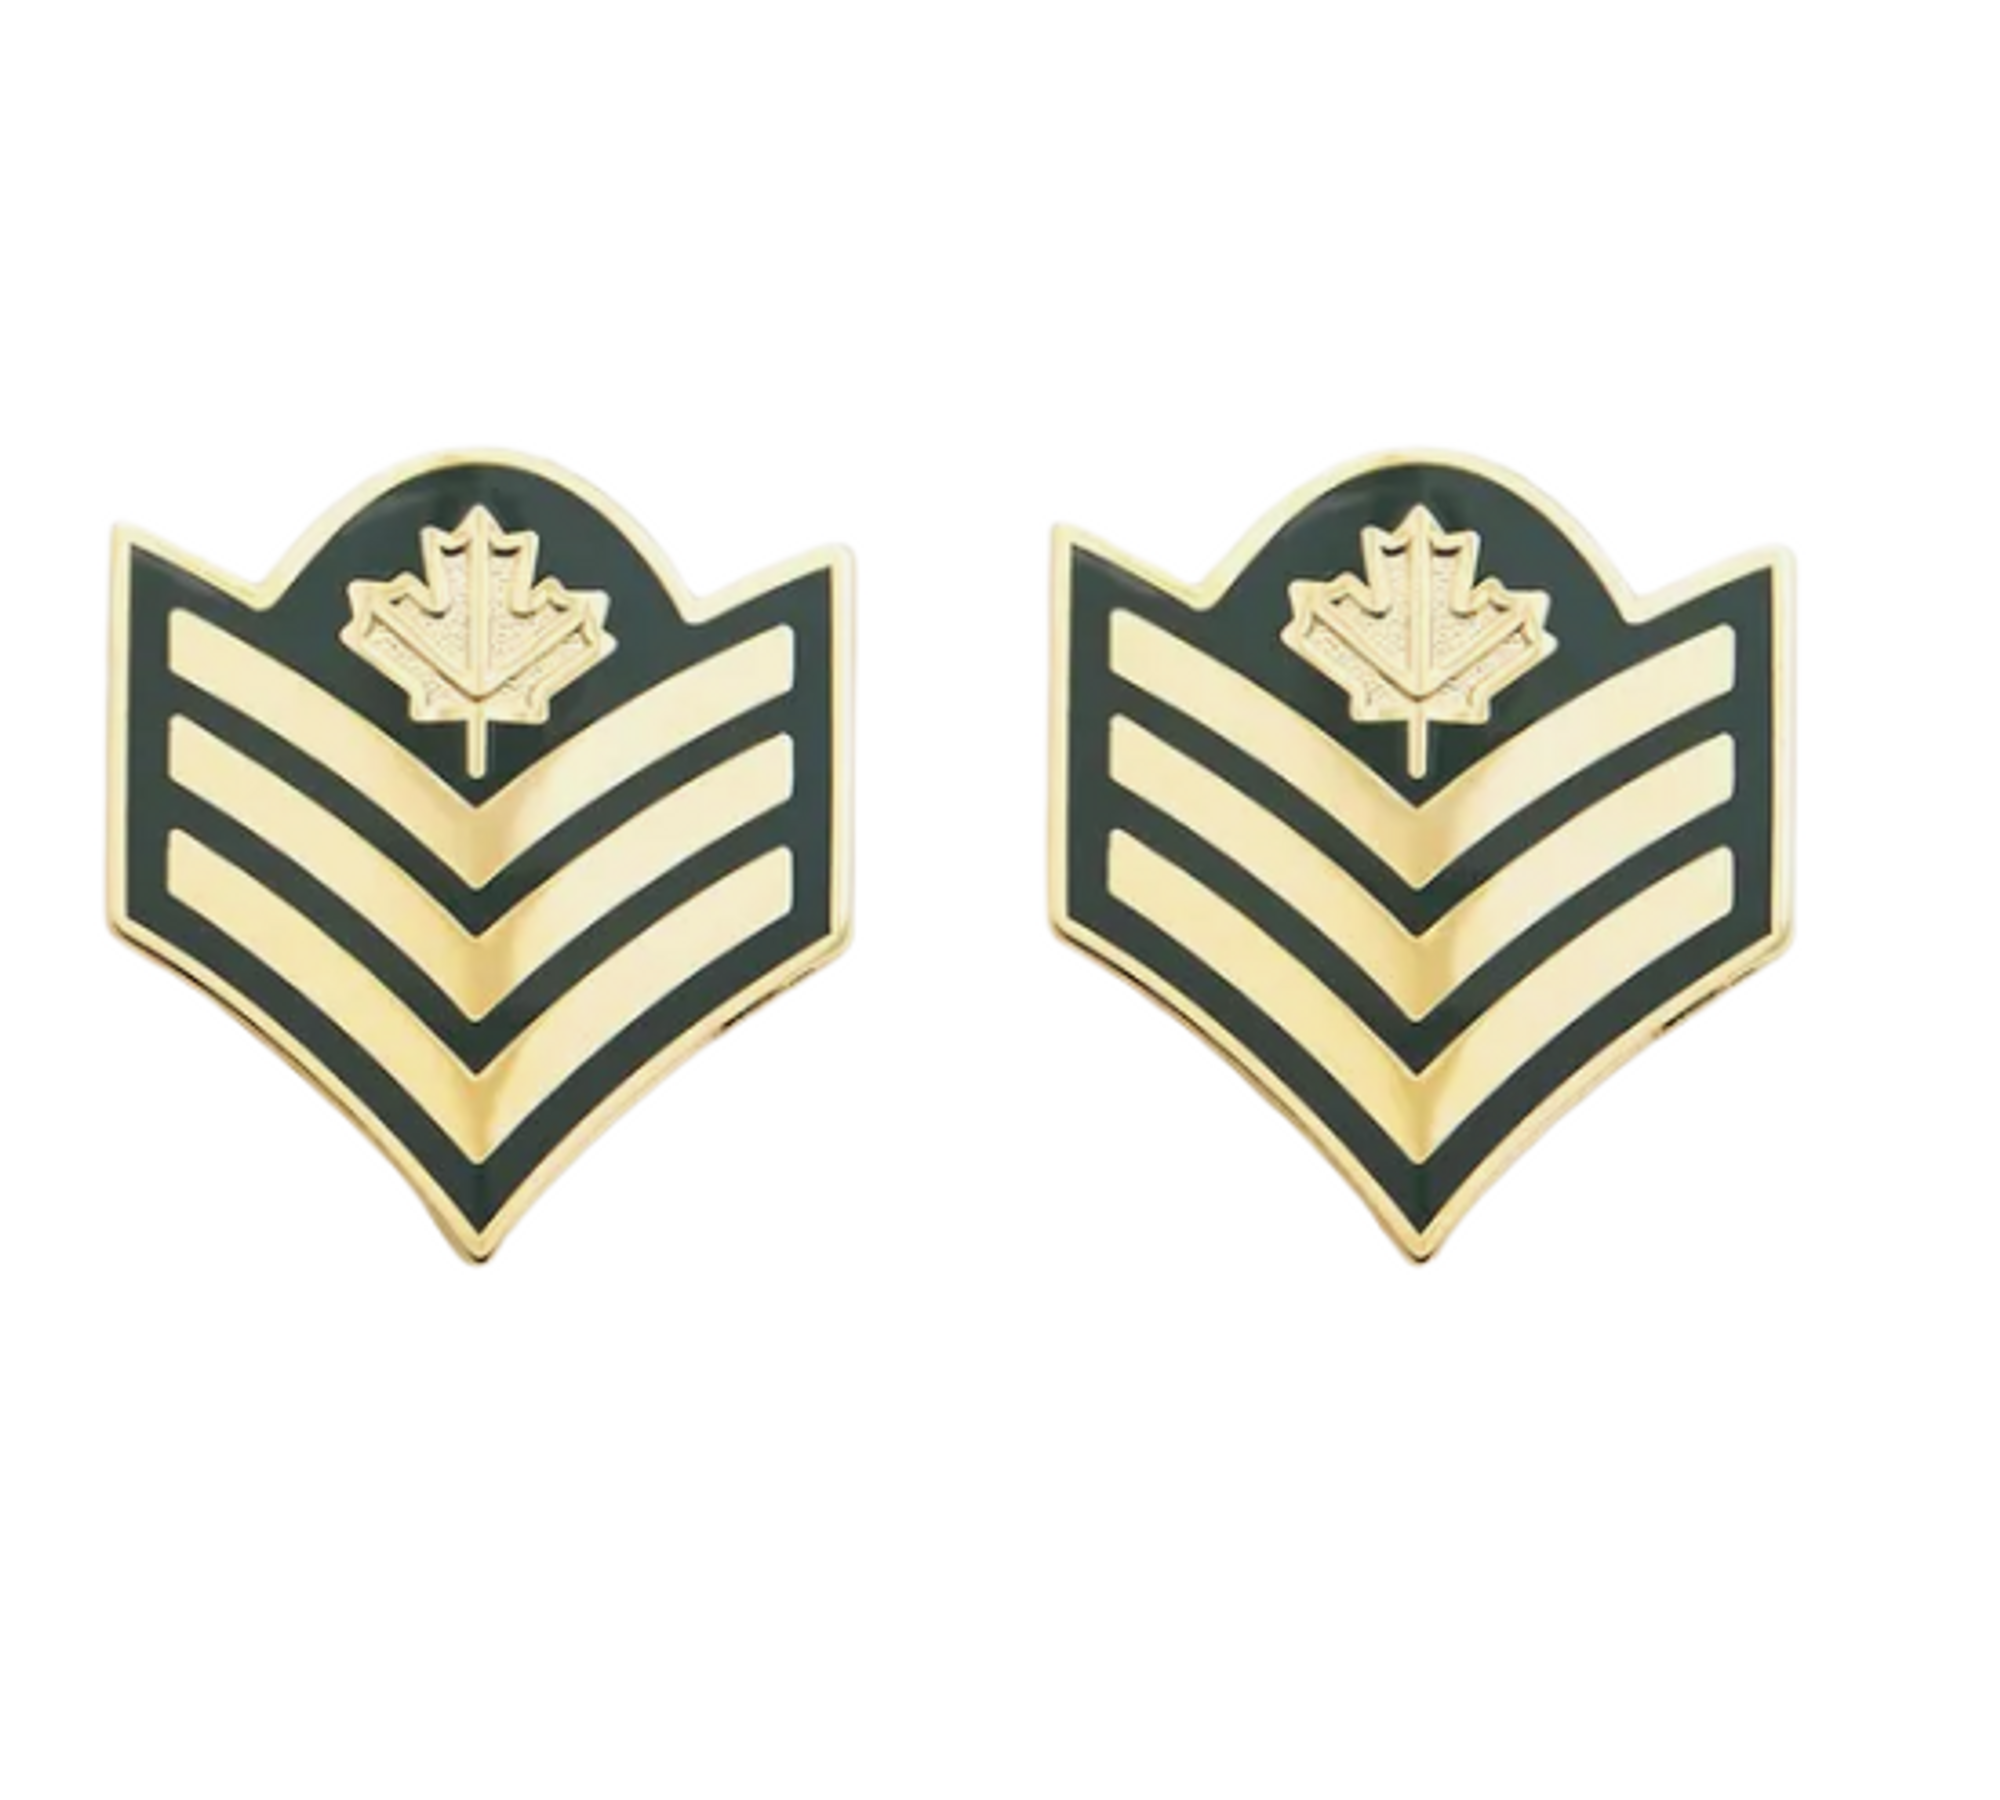 DEU Collar Rank Pins Sergeant (Pair)